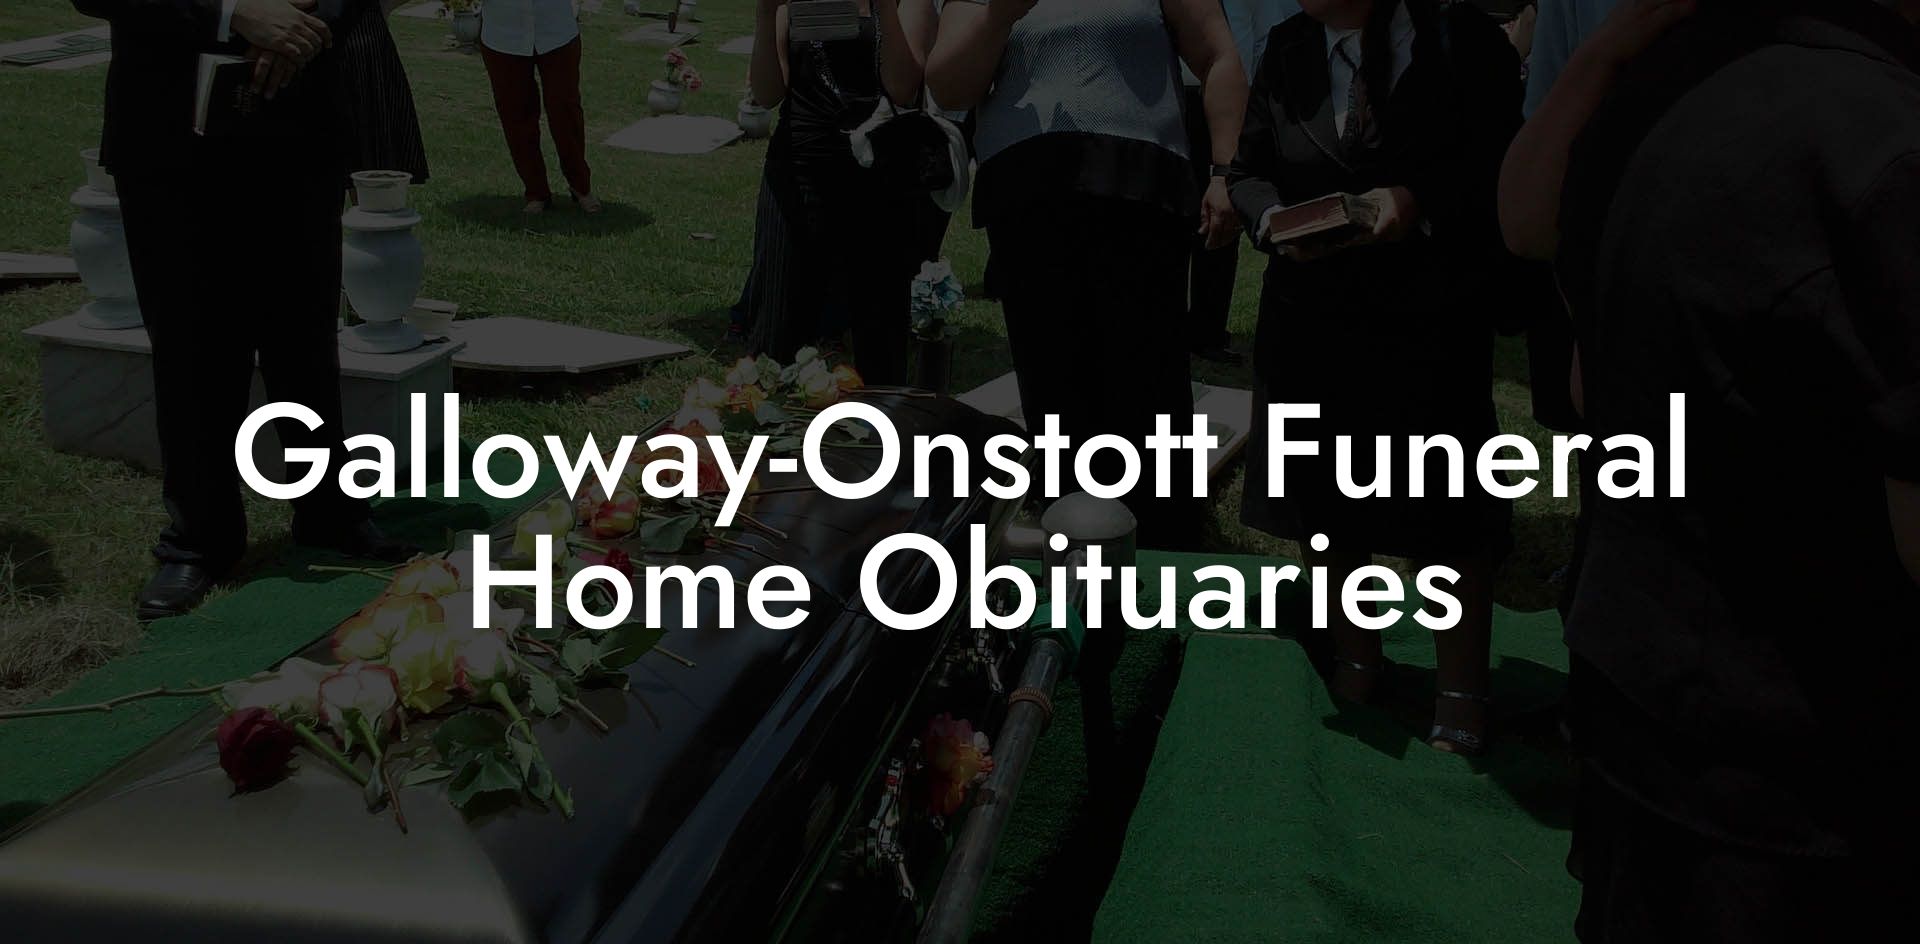 Galloway-Onstott Funeral Home Obituaries